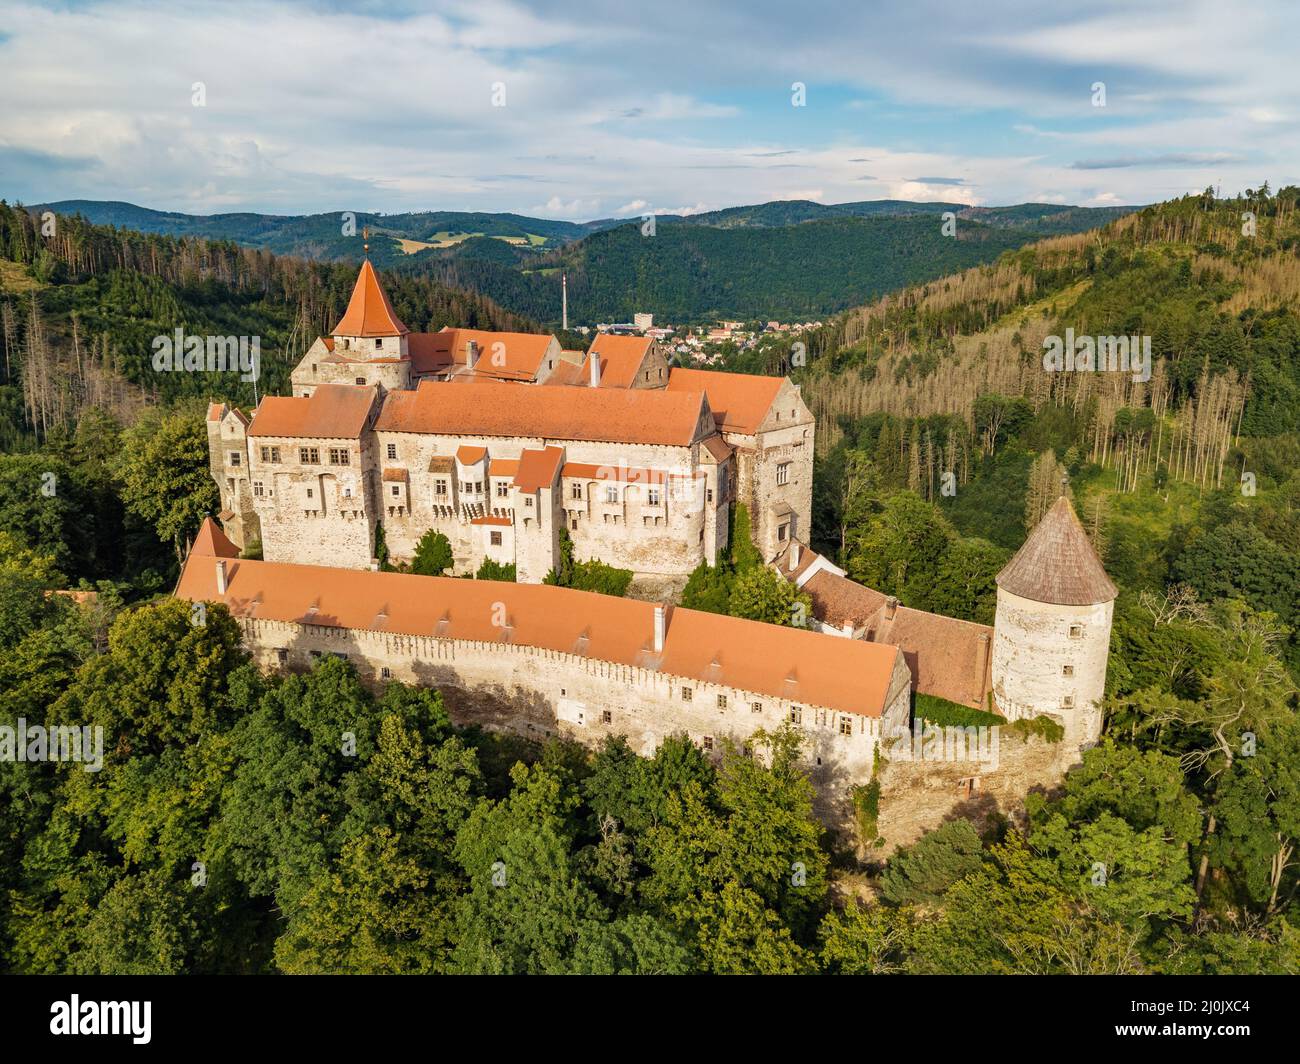 Historical medieval castle Pernstejn, Czech Republic Stock Photo